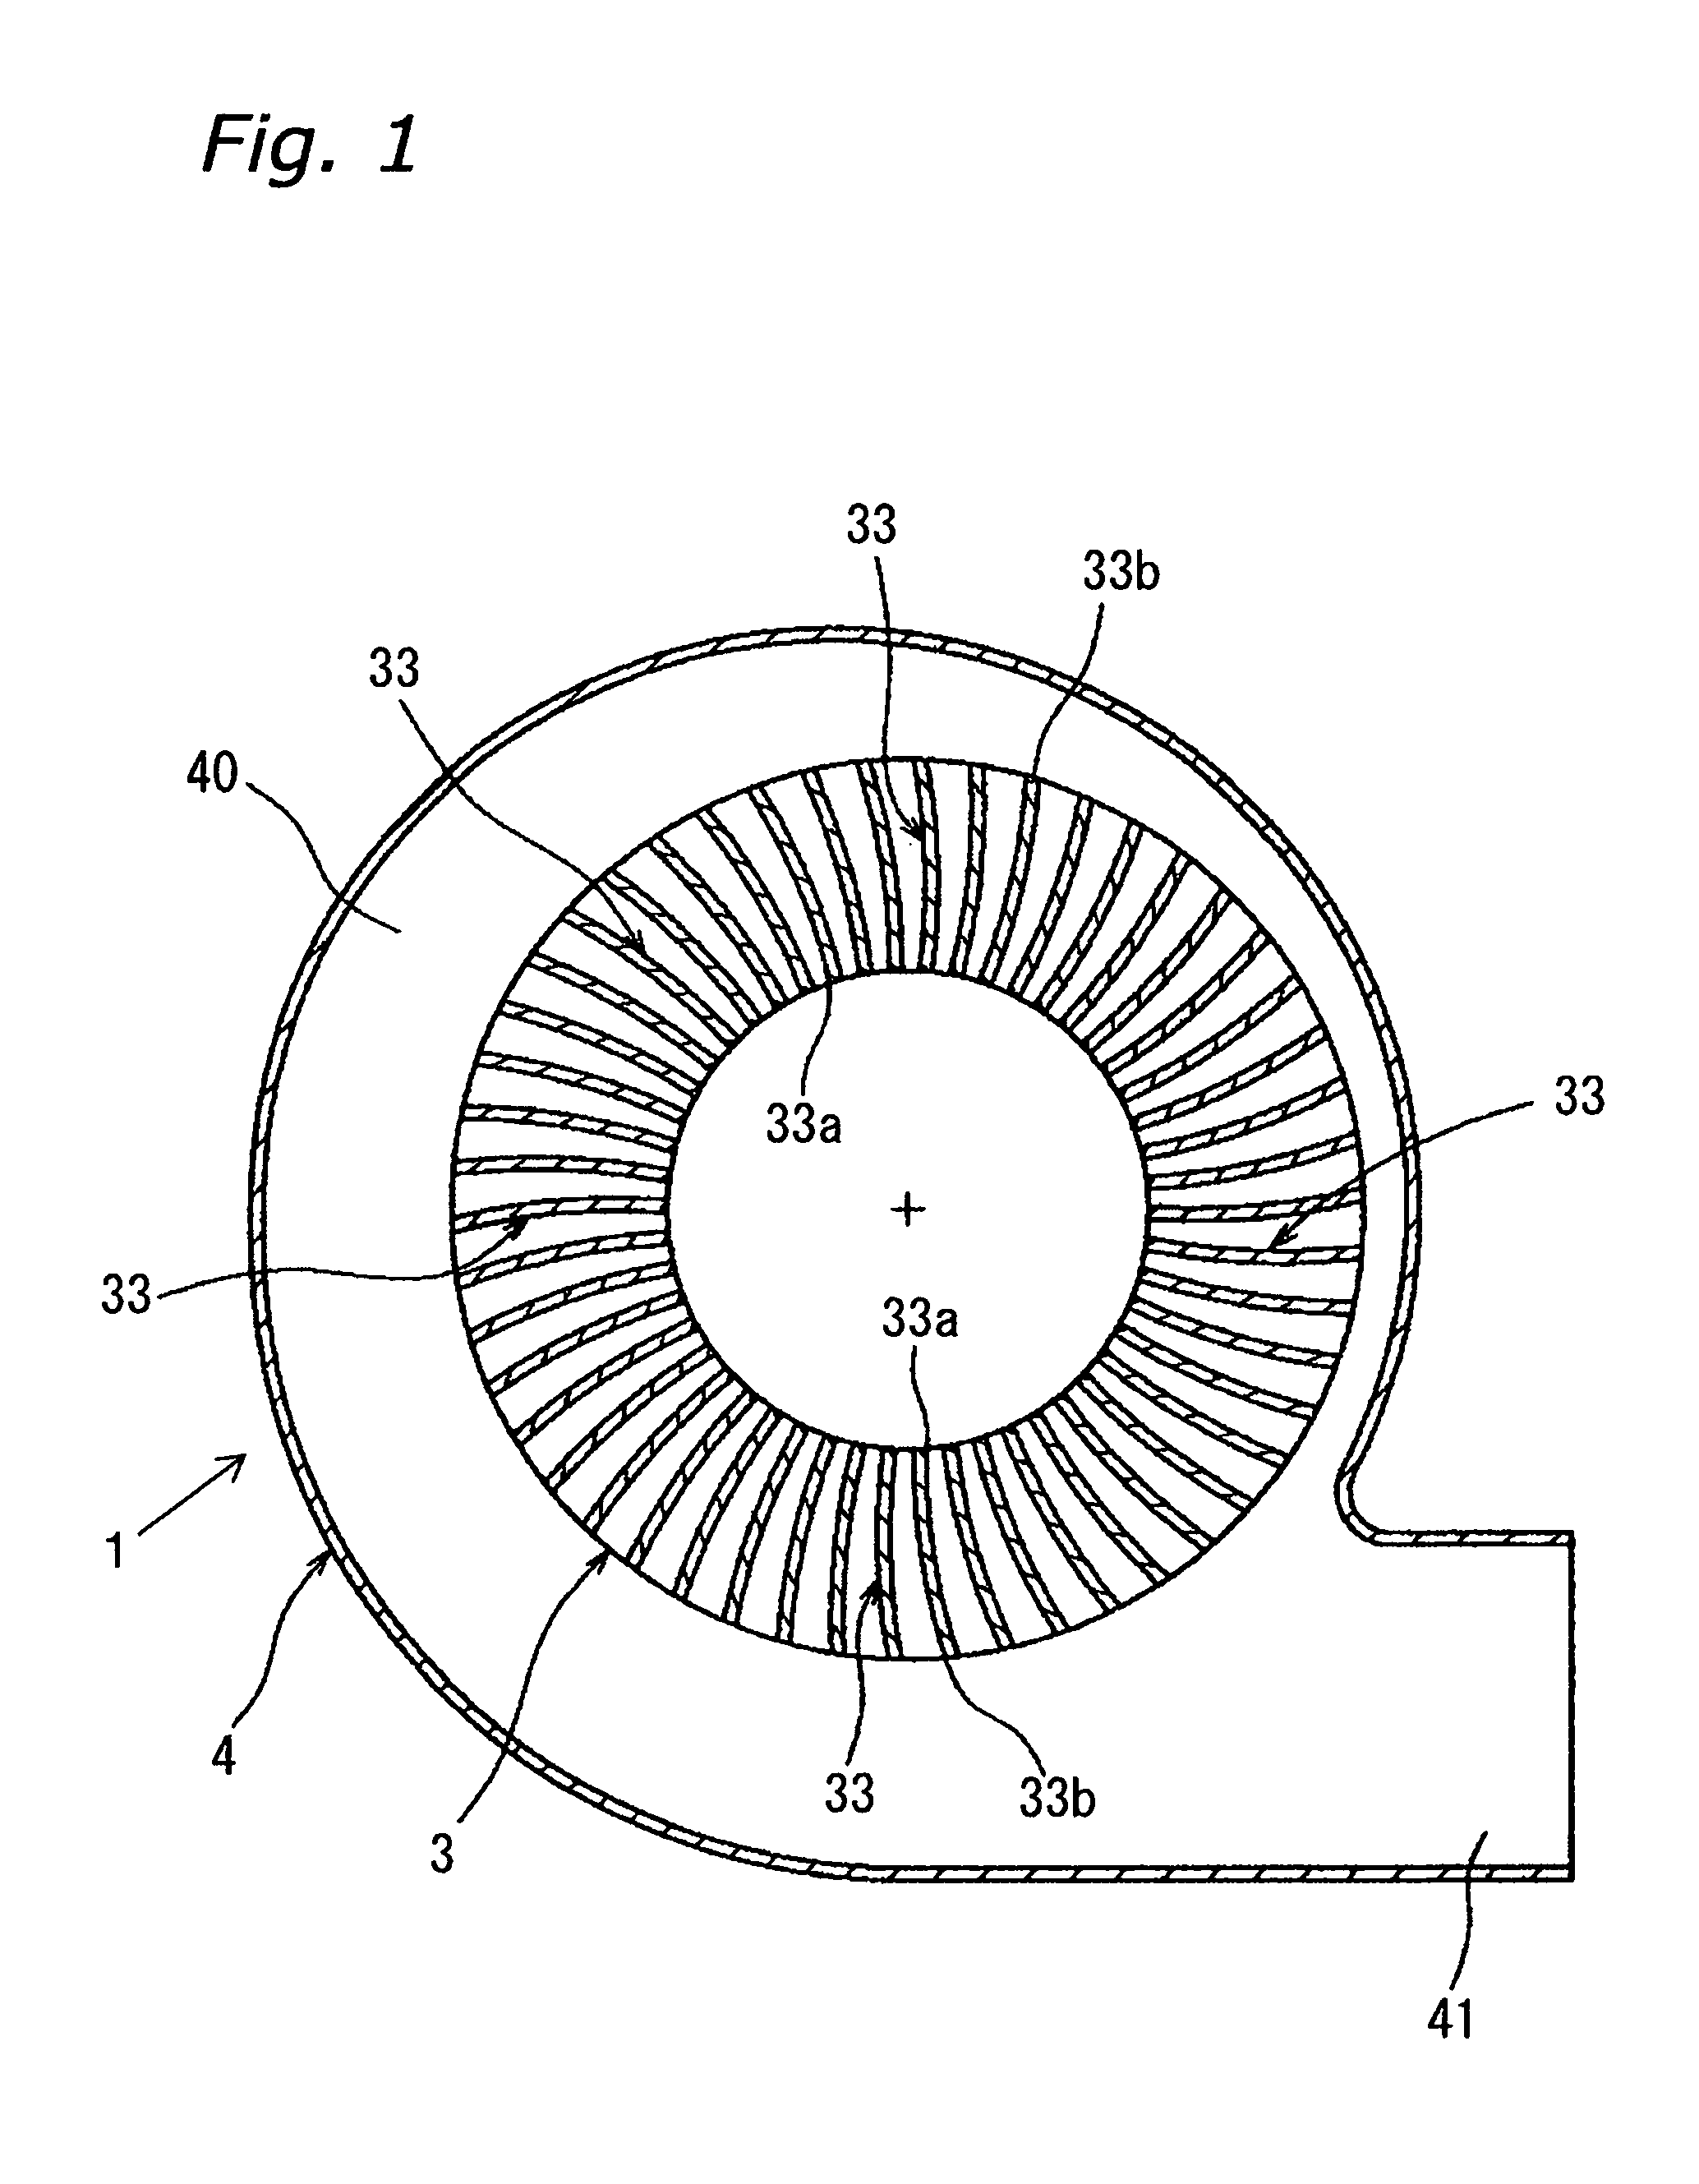 Multi-vane centrifugal fan